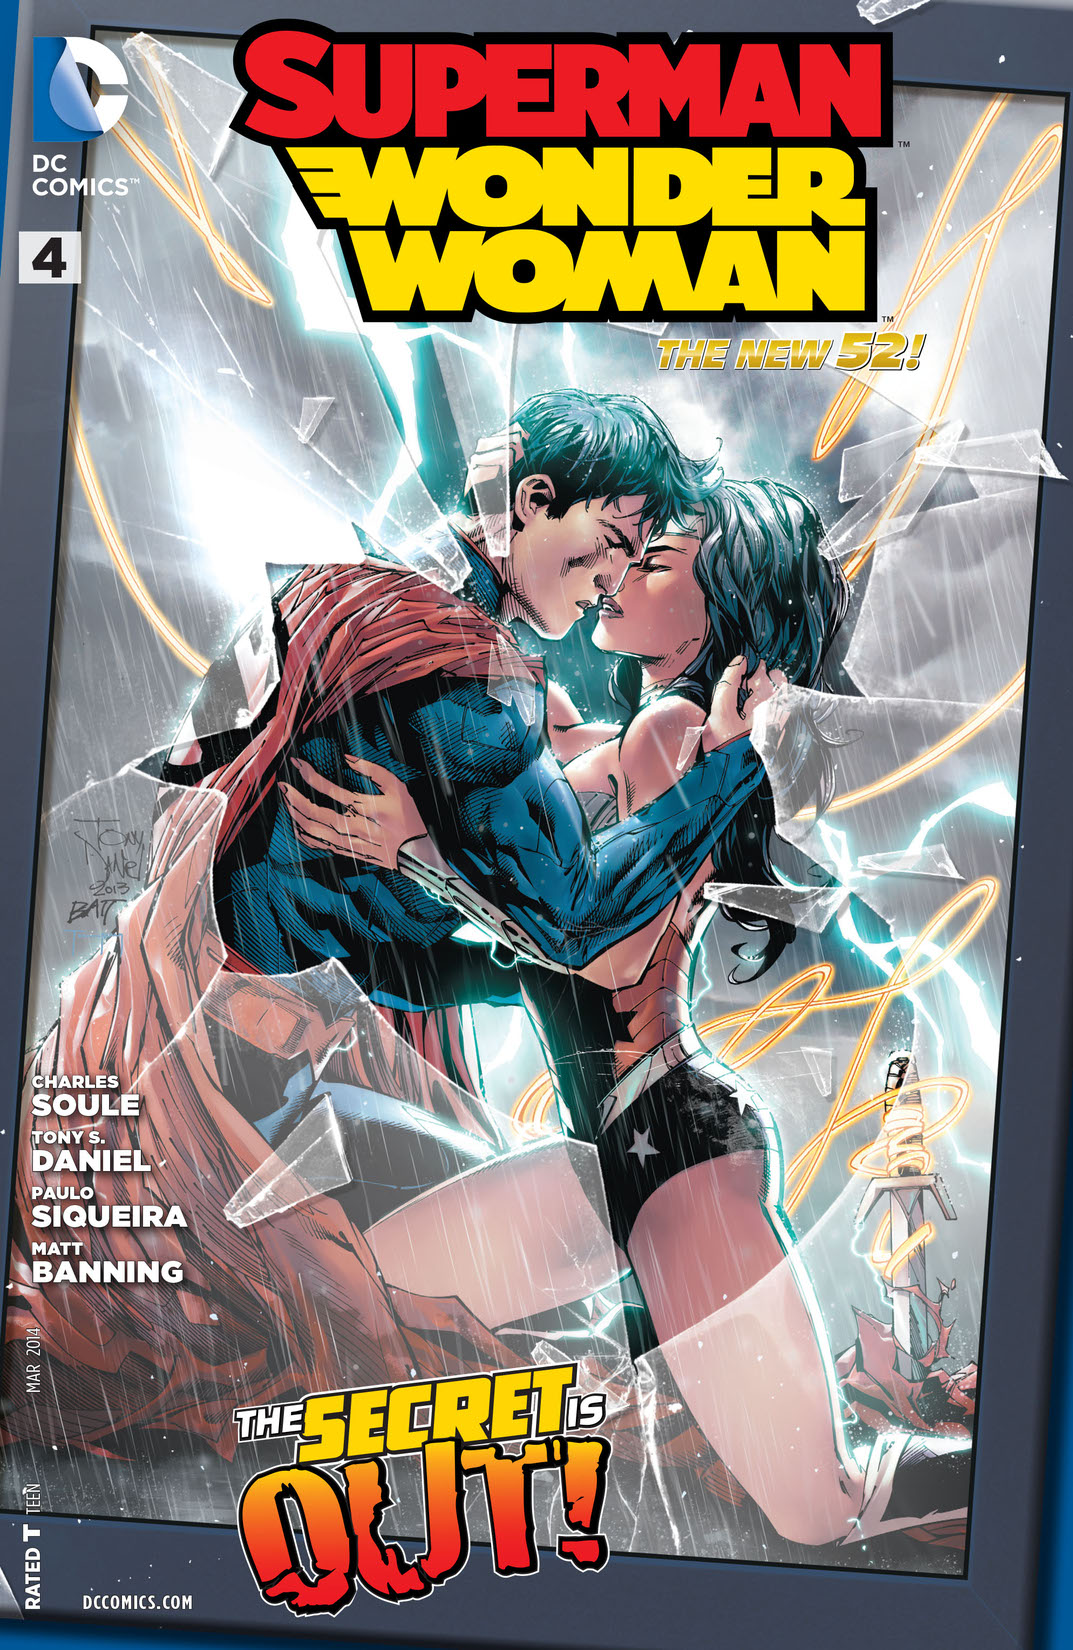 Superman/Wonder Woman #4 preview images